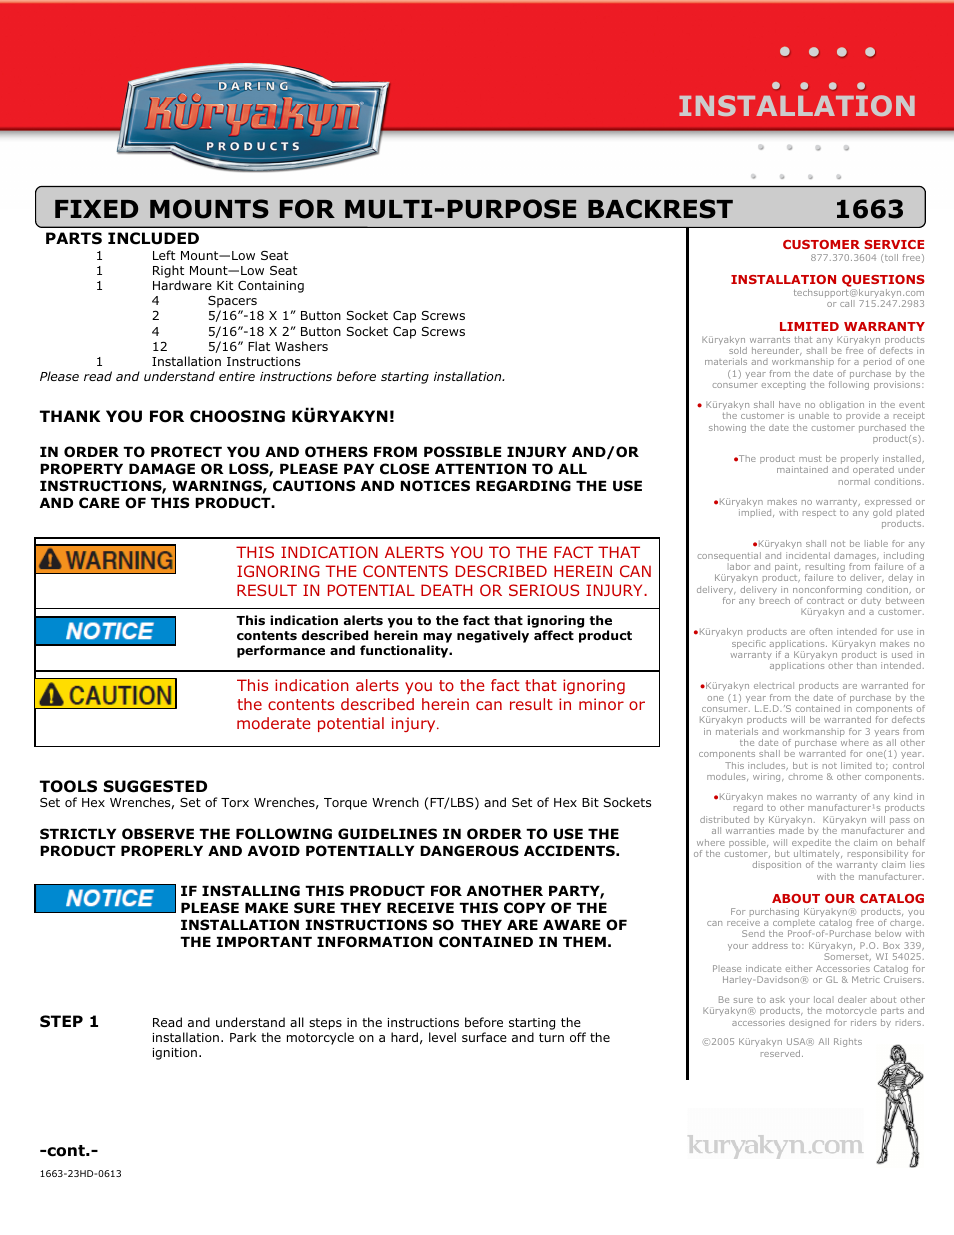 1663 FIXED MOUNTS FOR MULTI-PURPOSE BACKREST